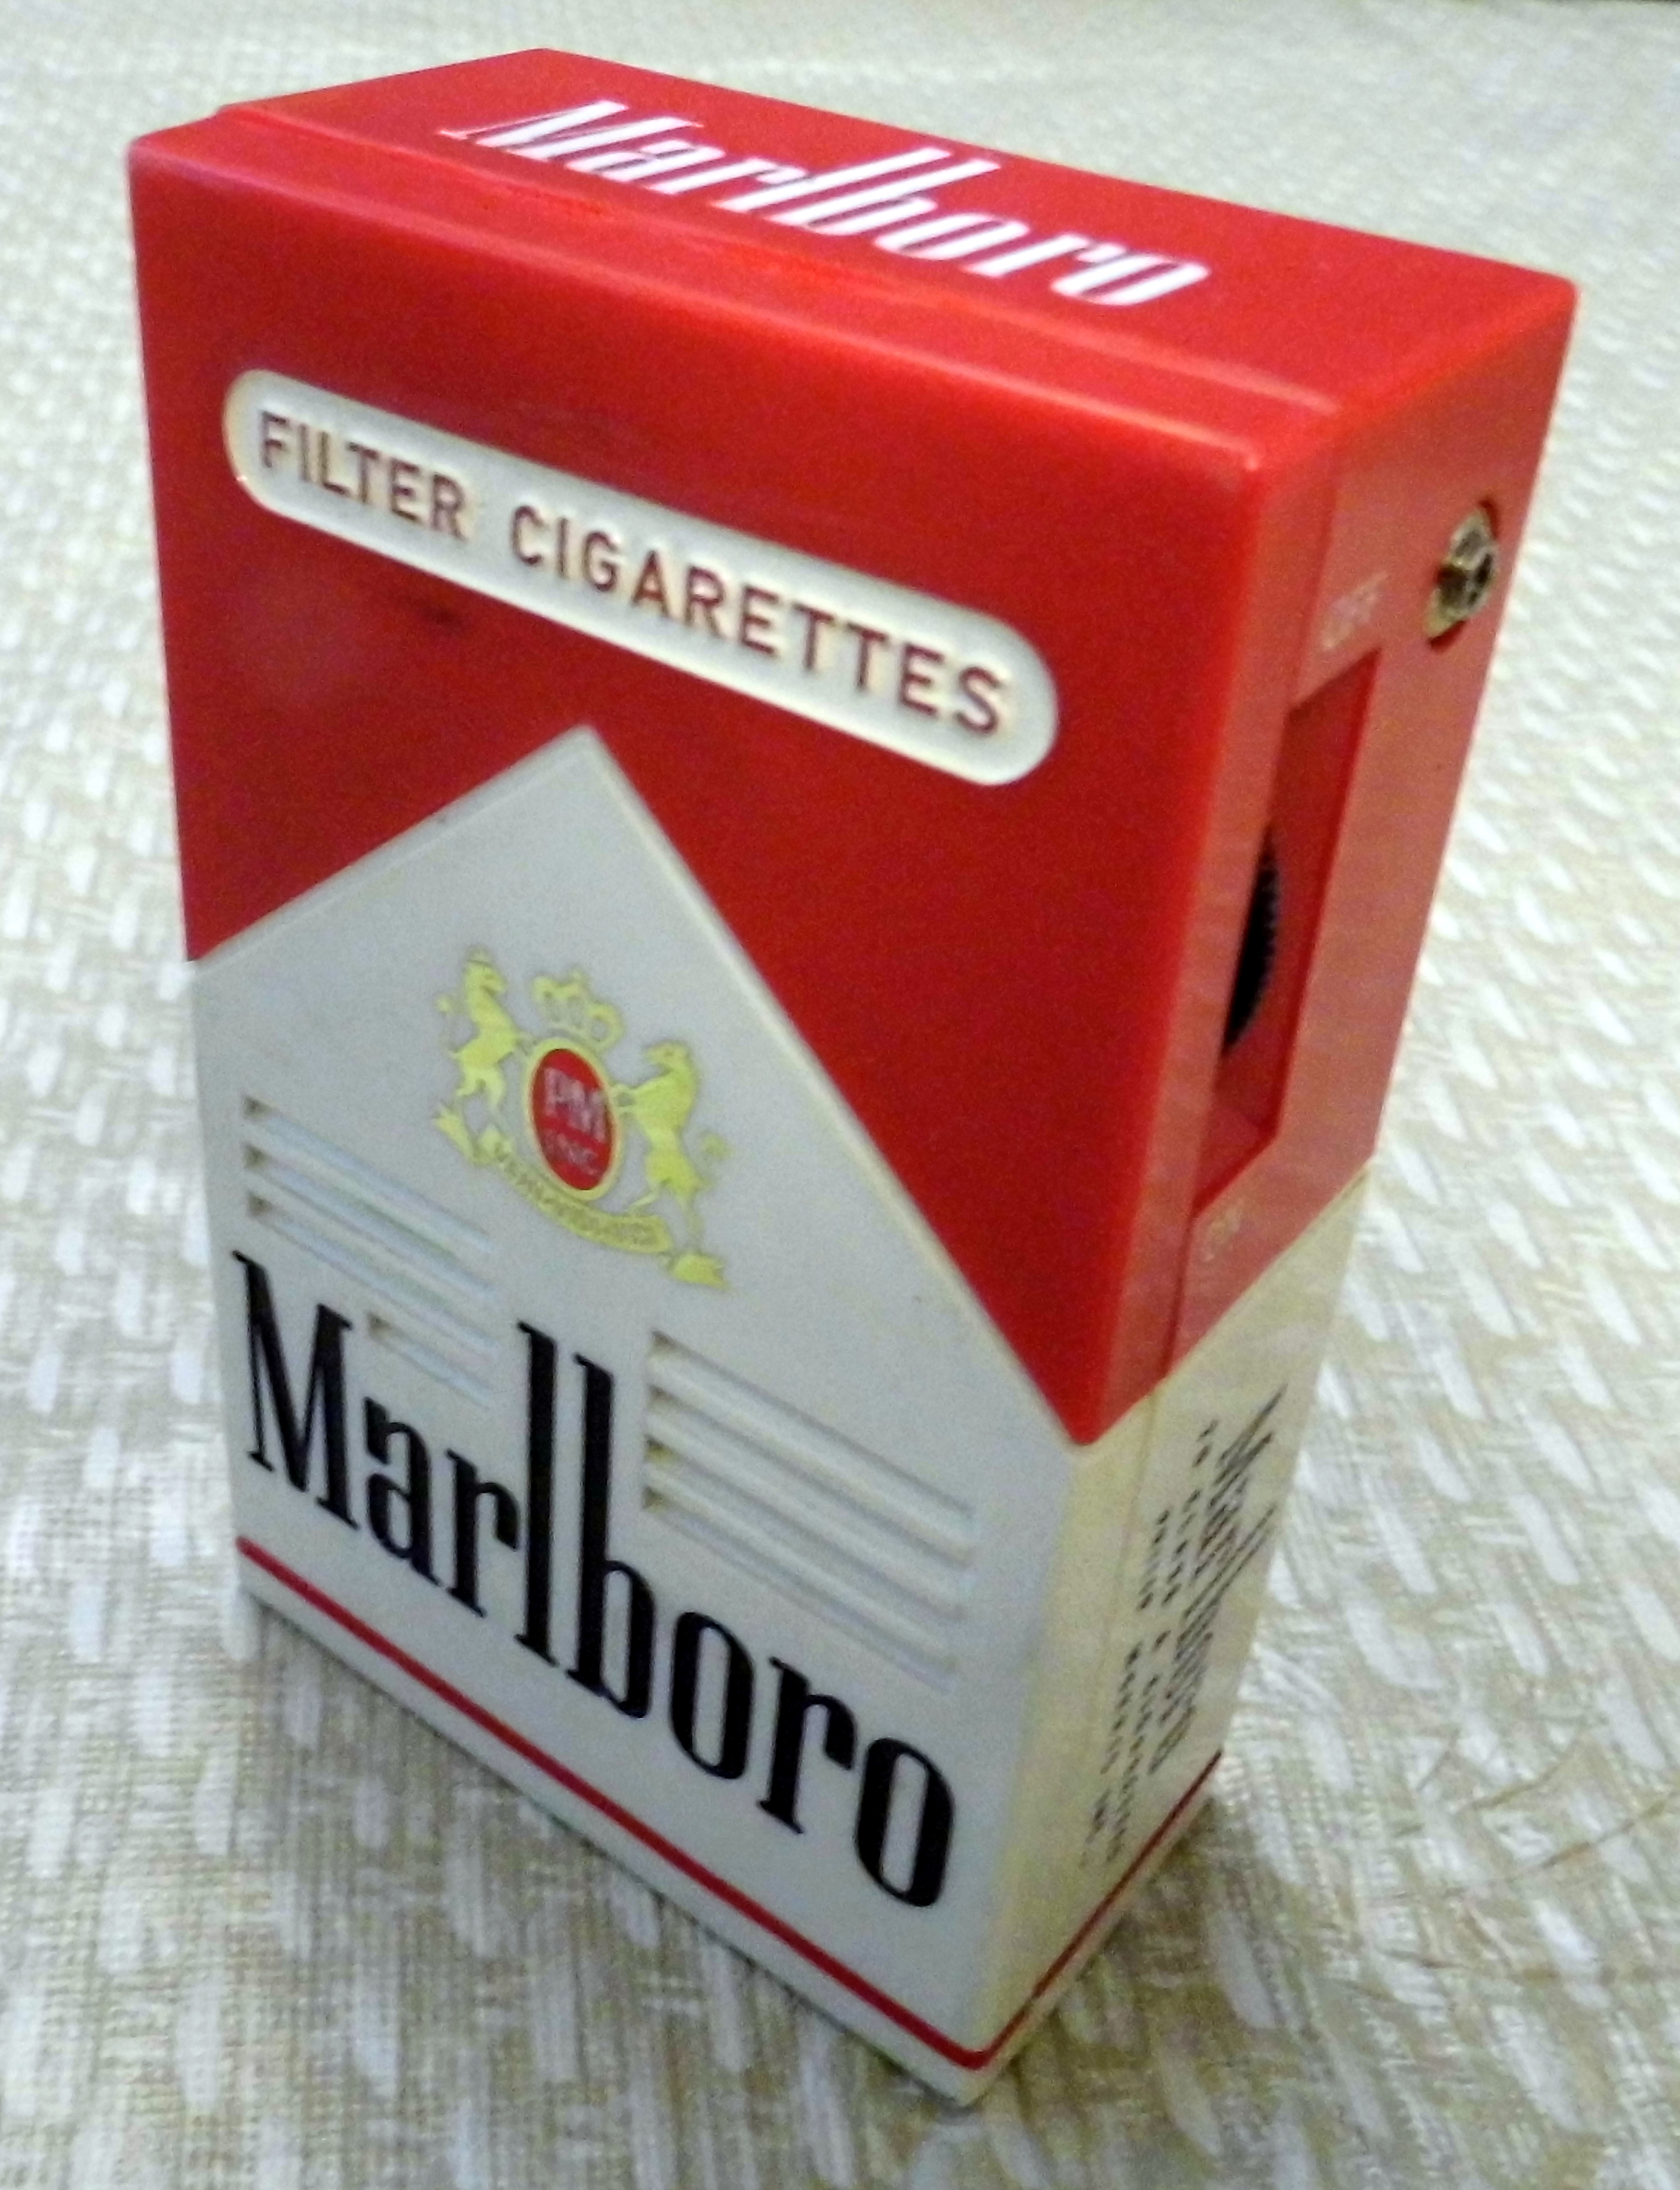 all types of marlboro cigarettes